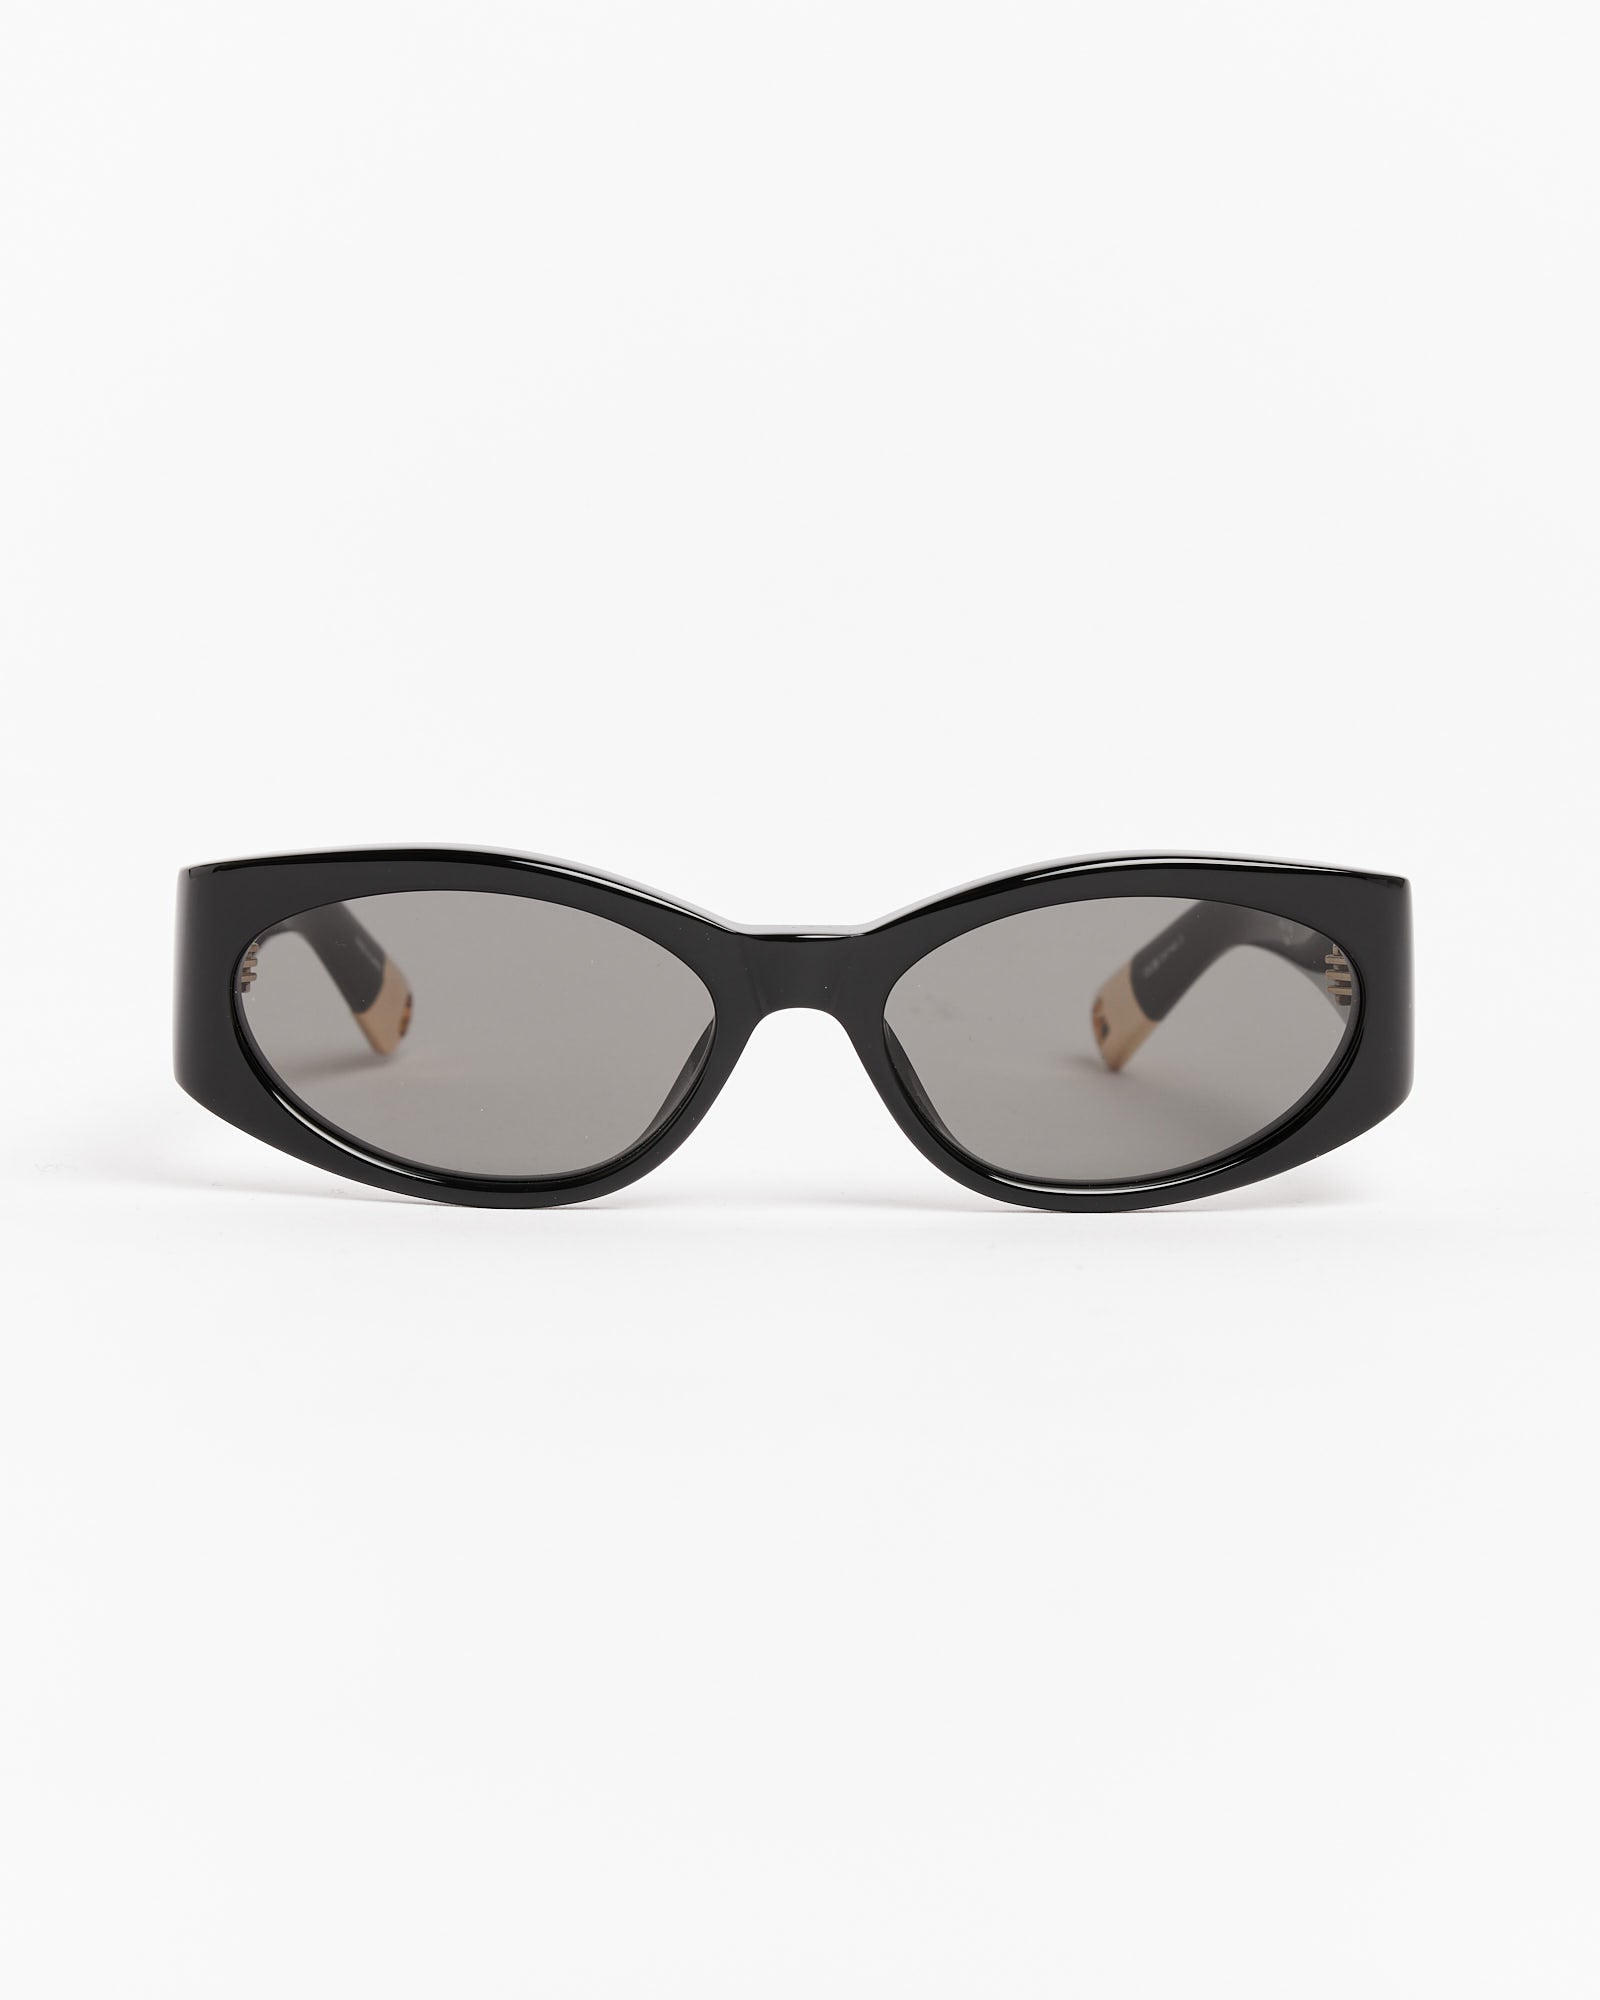 Les Lunettes Ovalo Sunglasses in Black